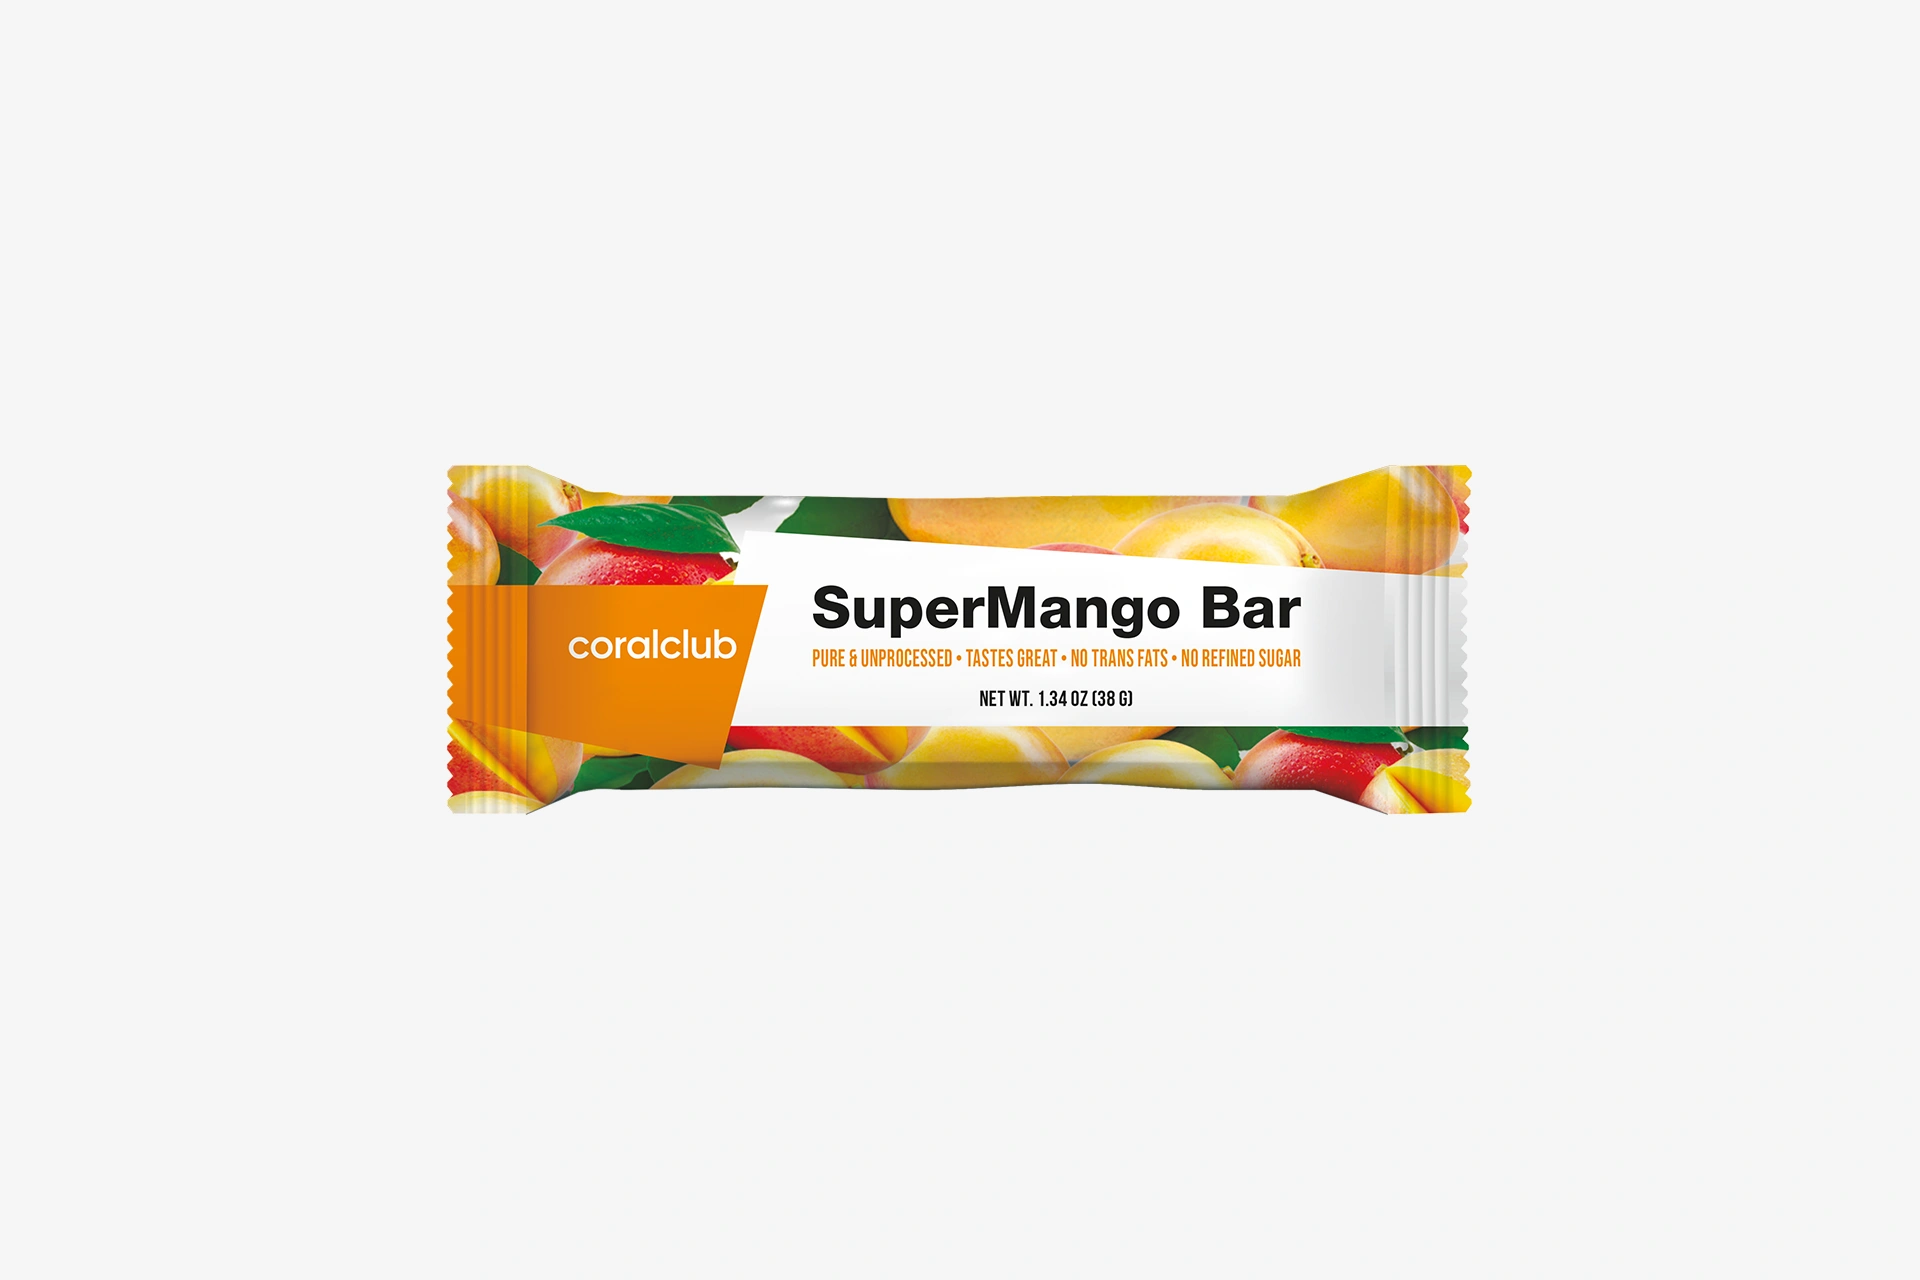 SuperMango Bar